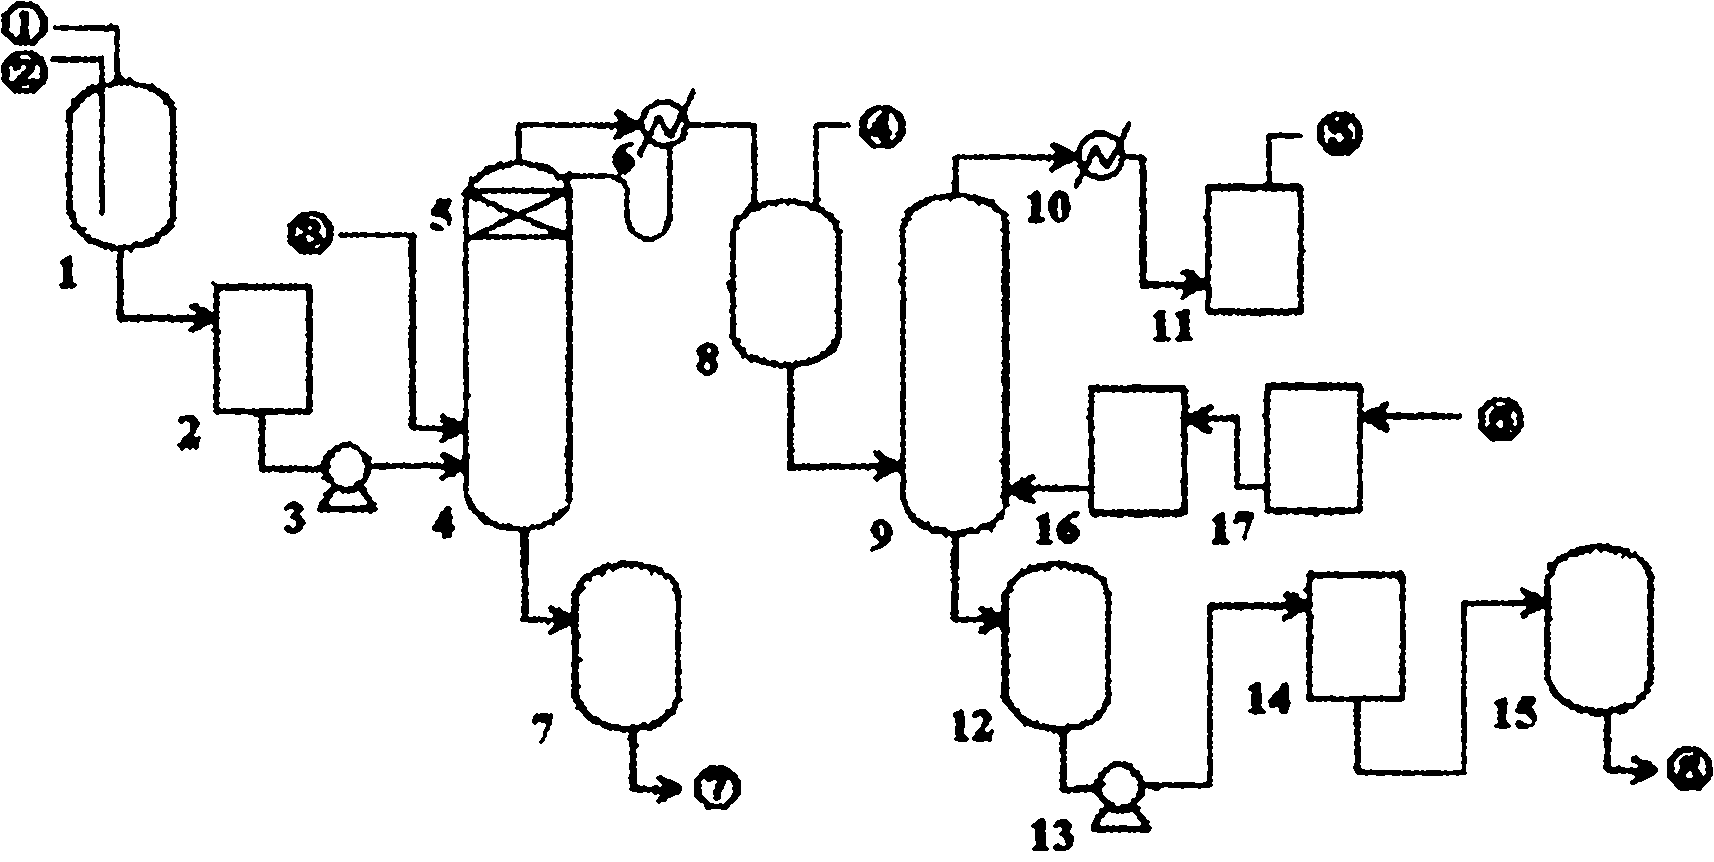 Process for preparing ultrapure nitric acid